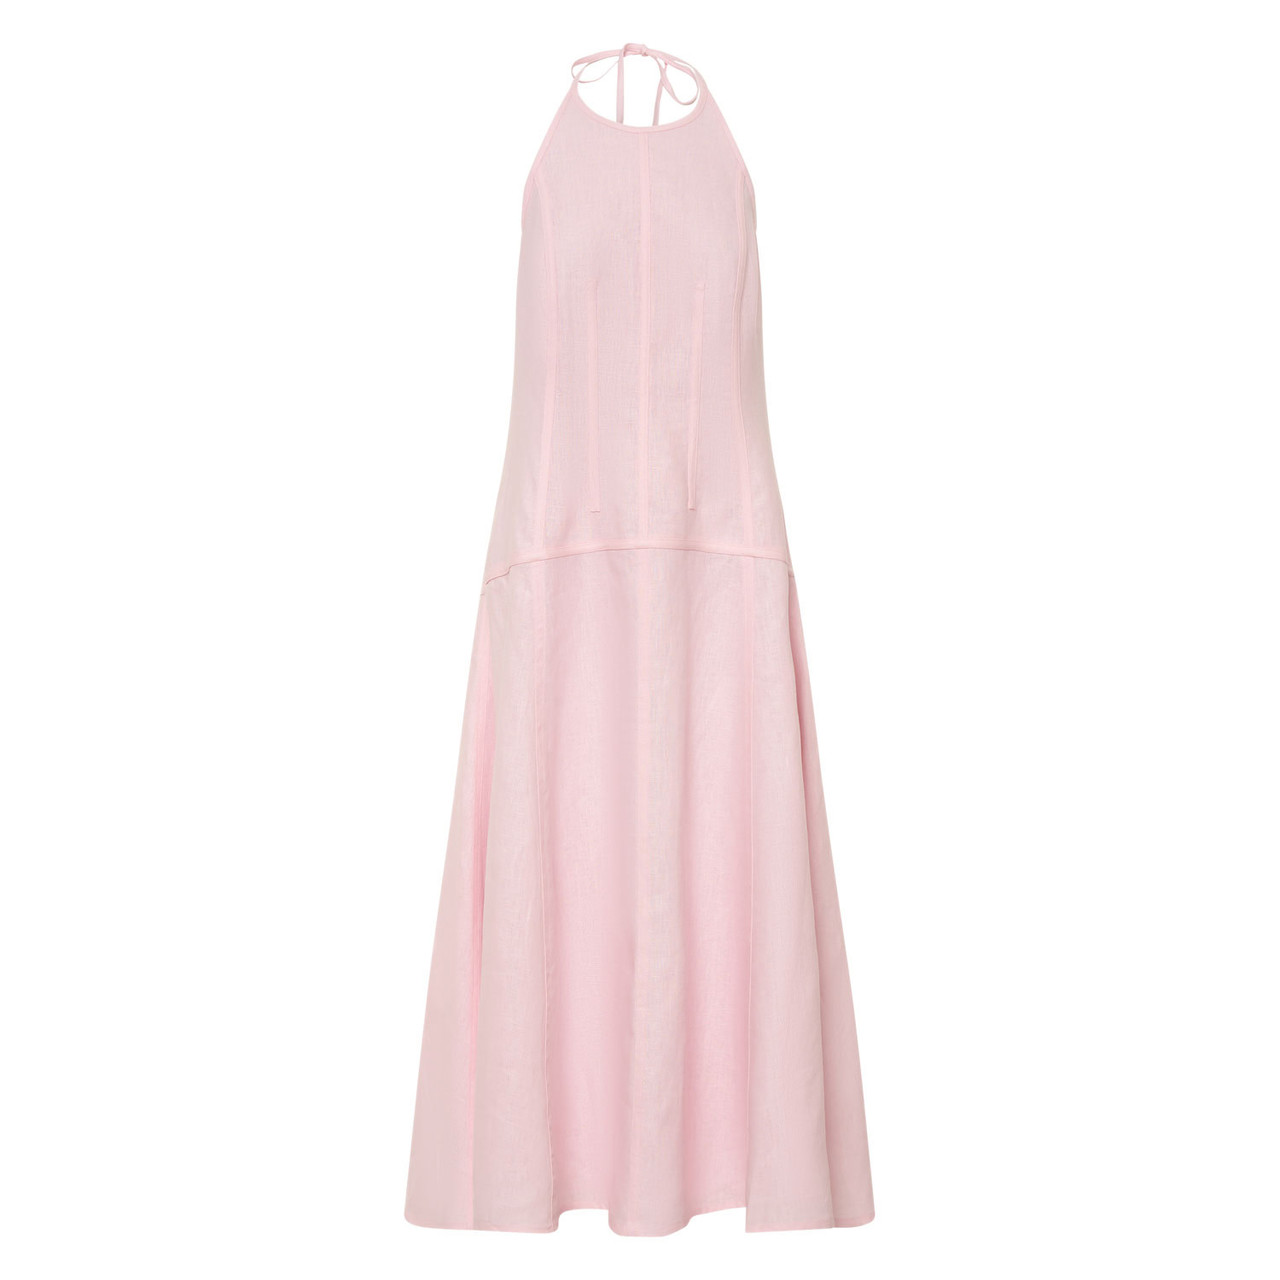 DEAL - Women's Pink/Black Halter Dress - Small - Chest 30 - Length 40